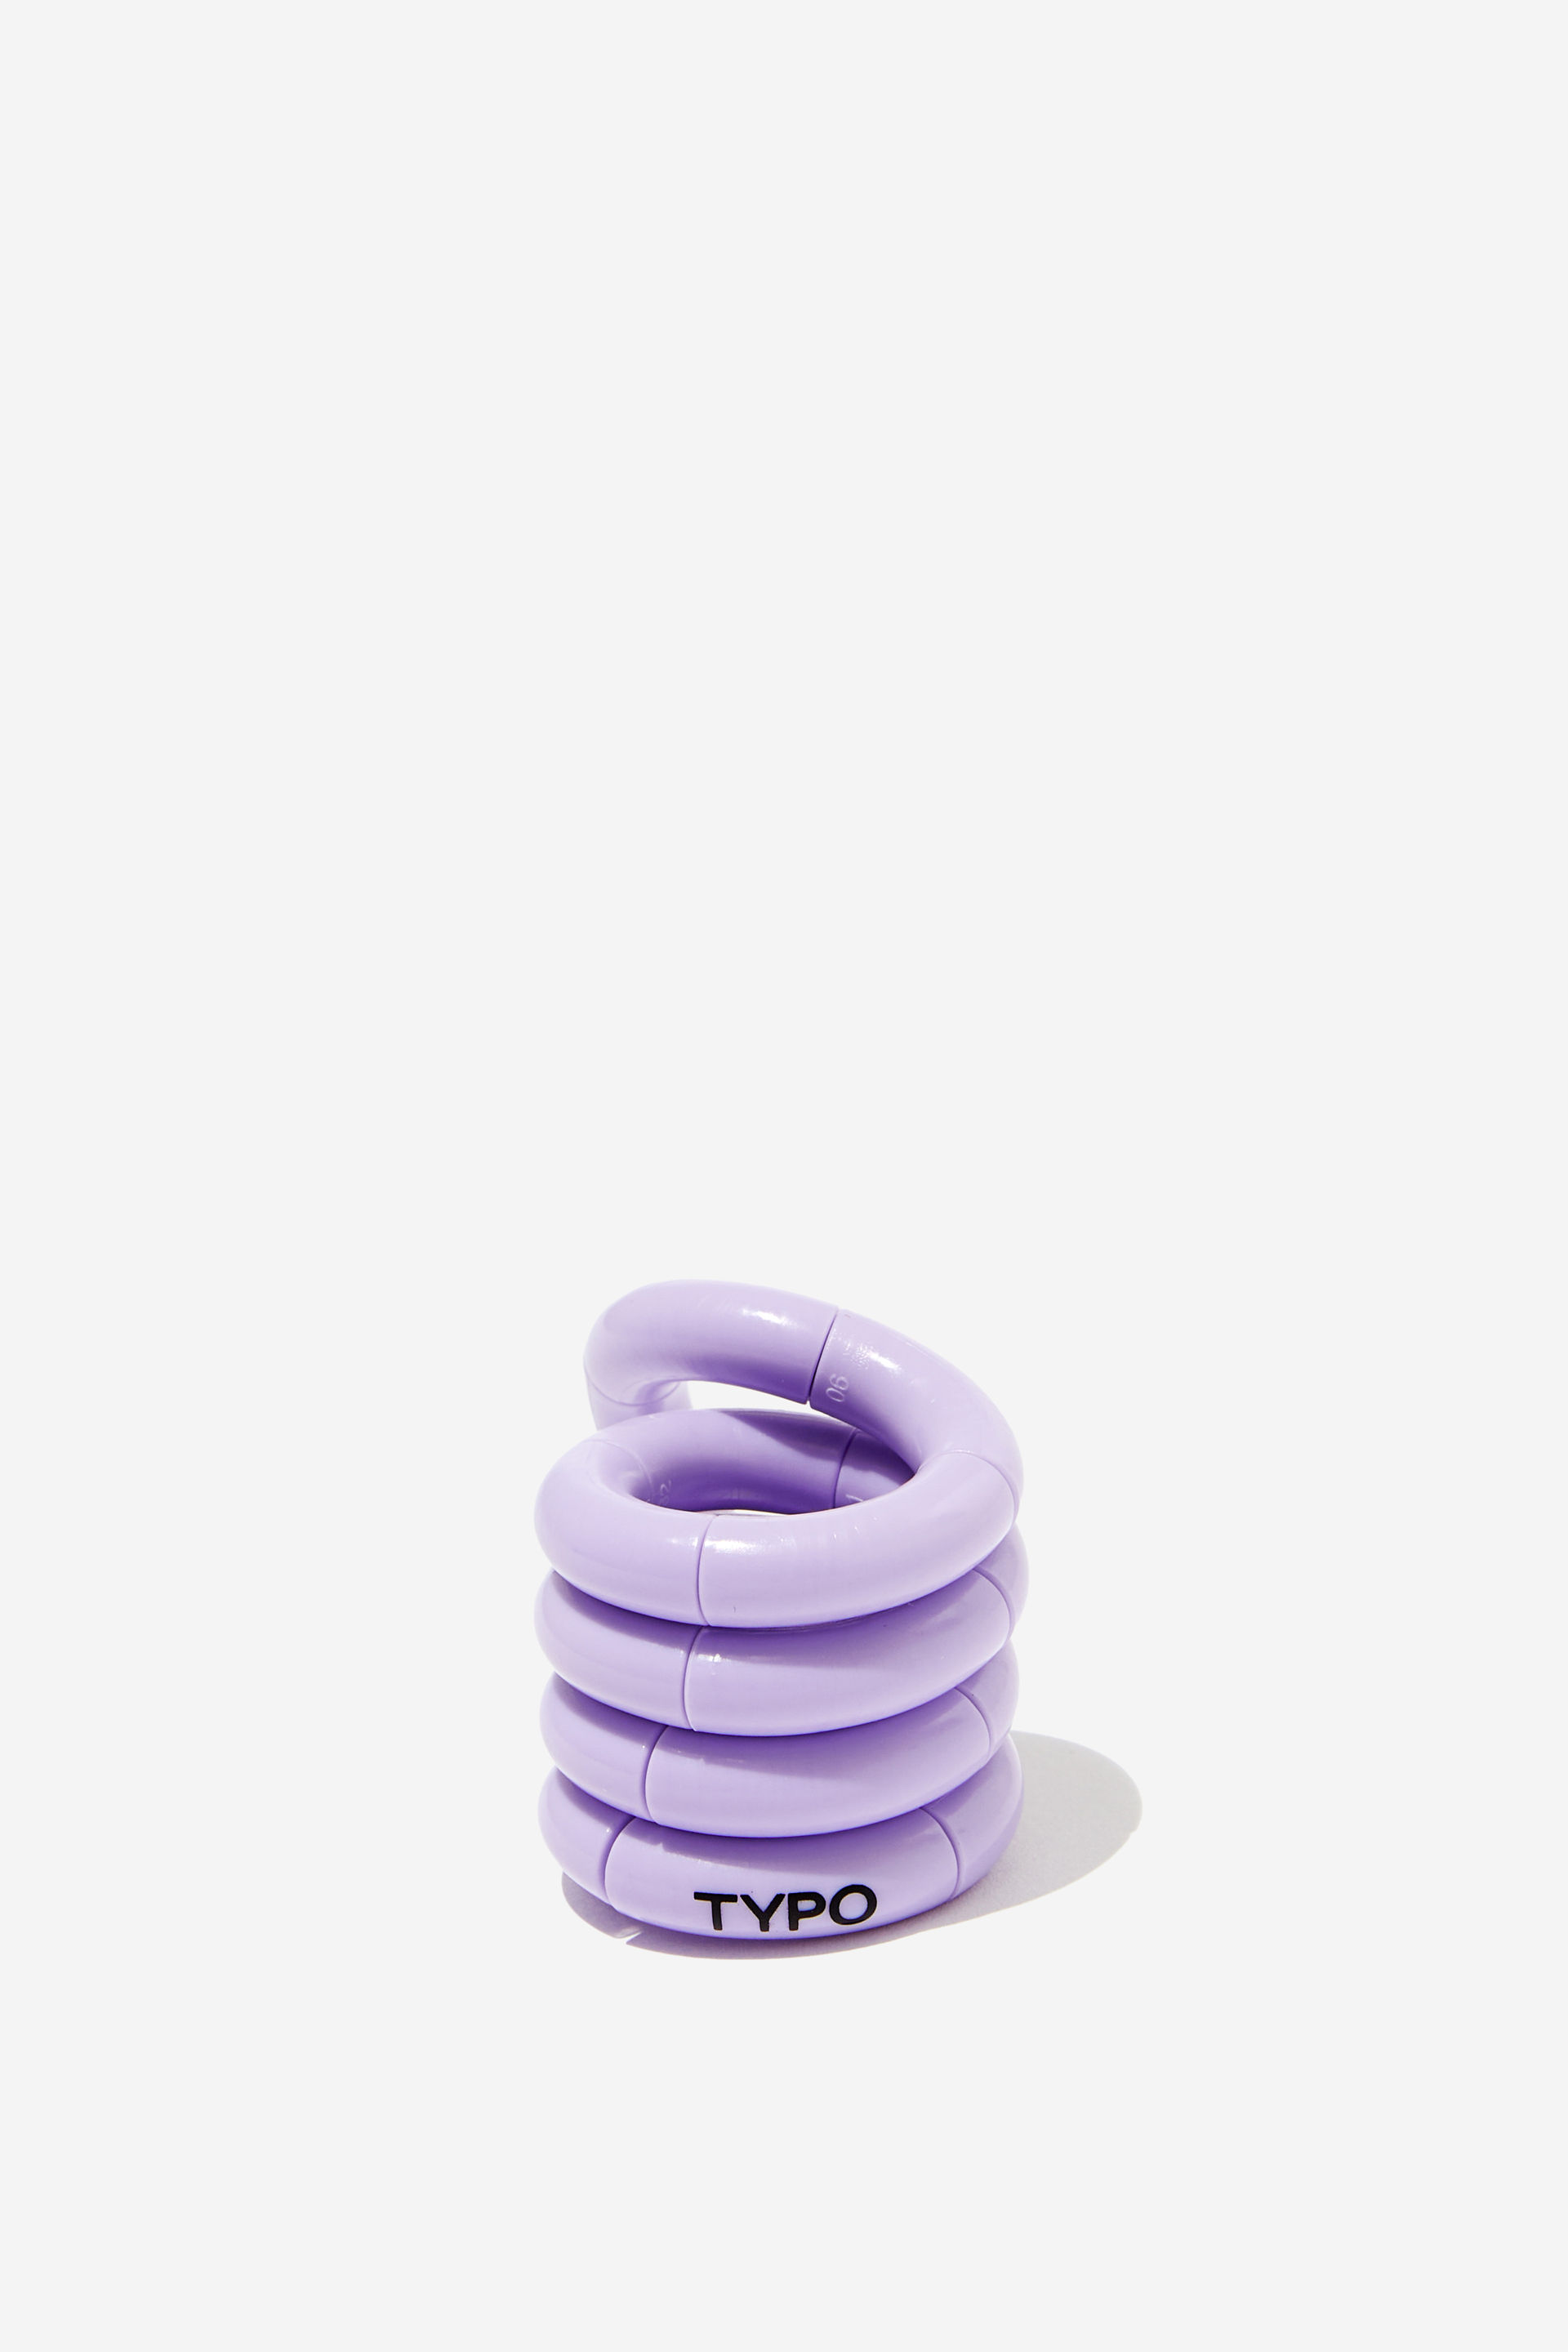 Typo - Knot This Twisting Gadget - Soft lilac